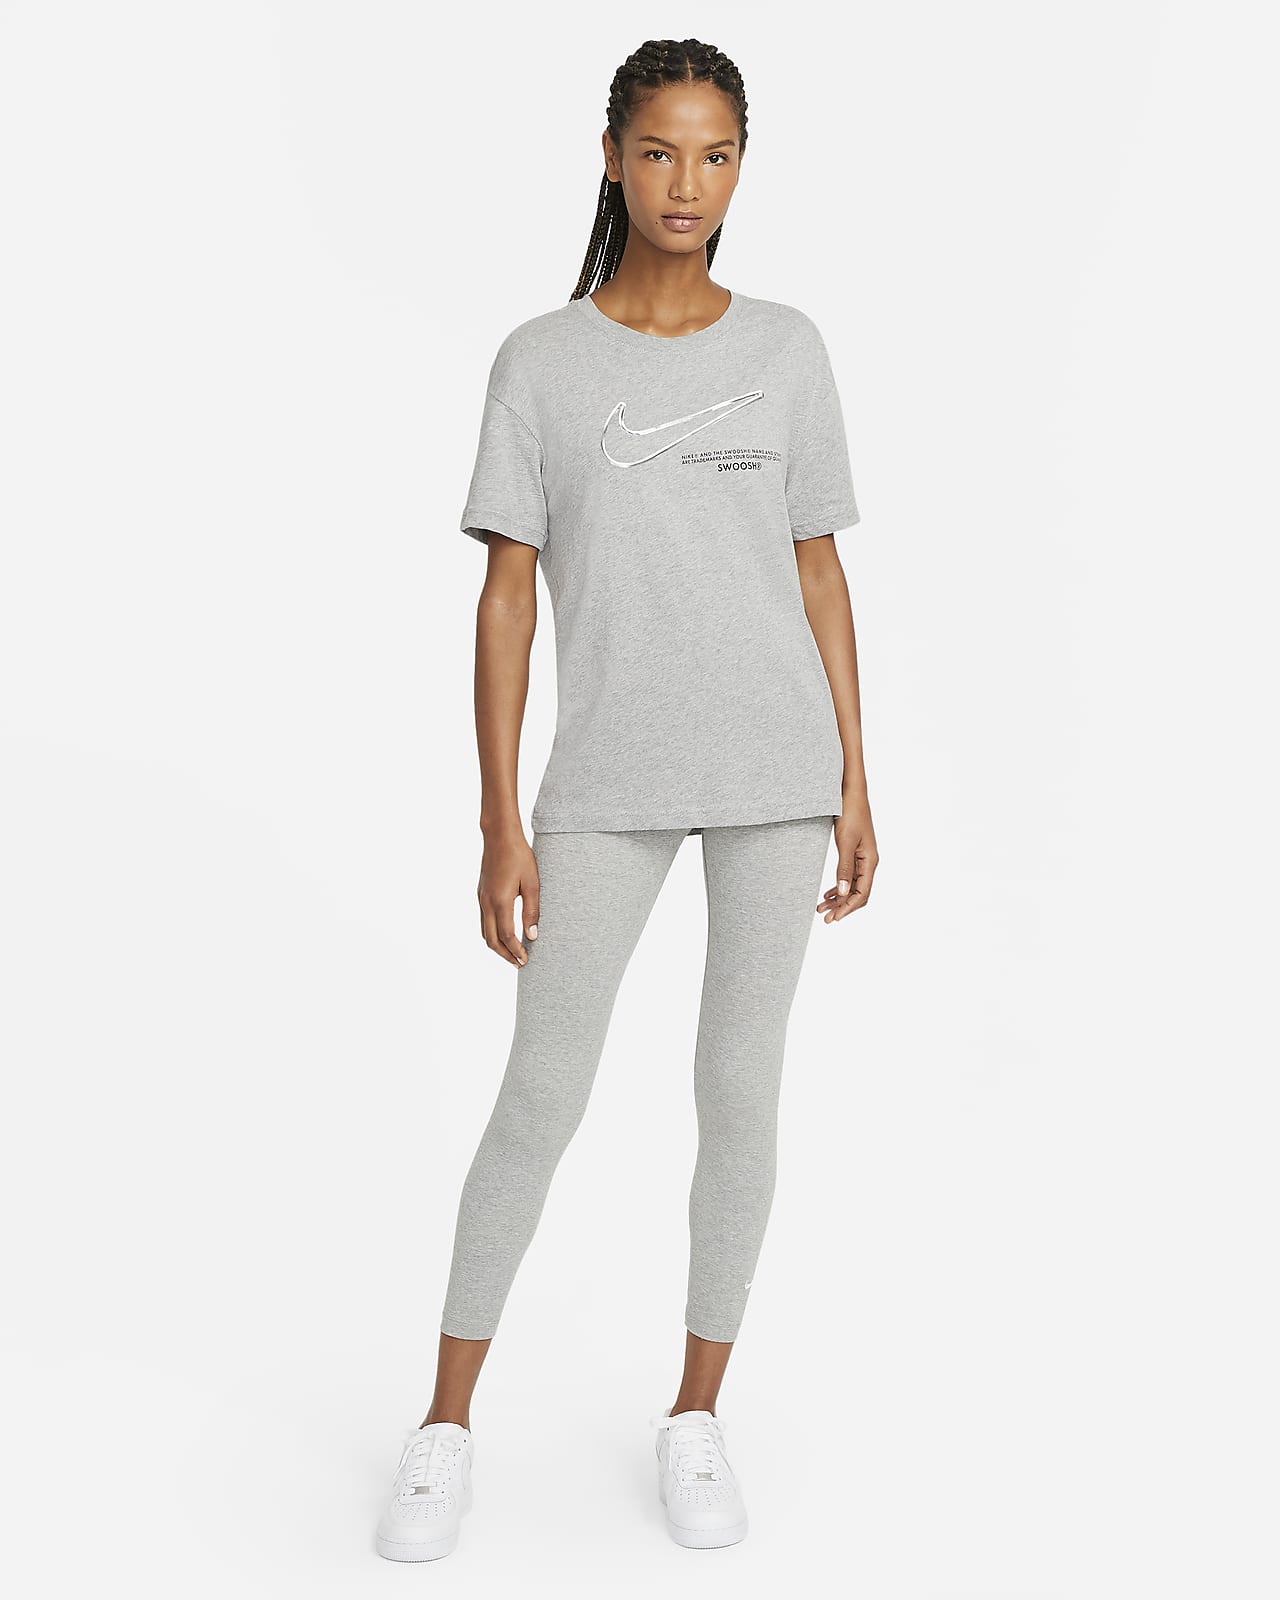 Nike Sportswear Essential Women's 7/8 Mid-Rise Leggings Dark Grey